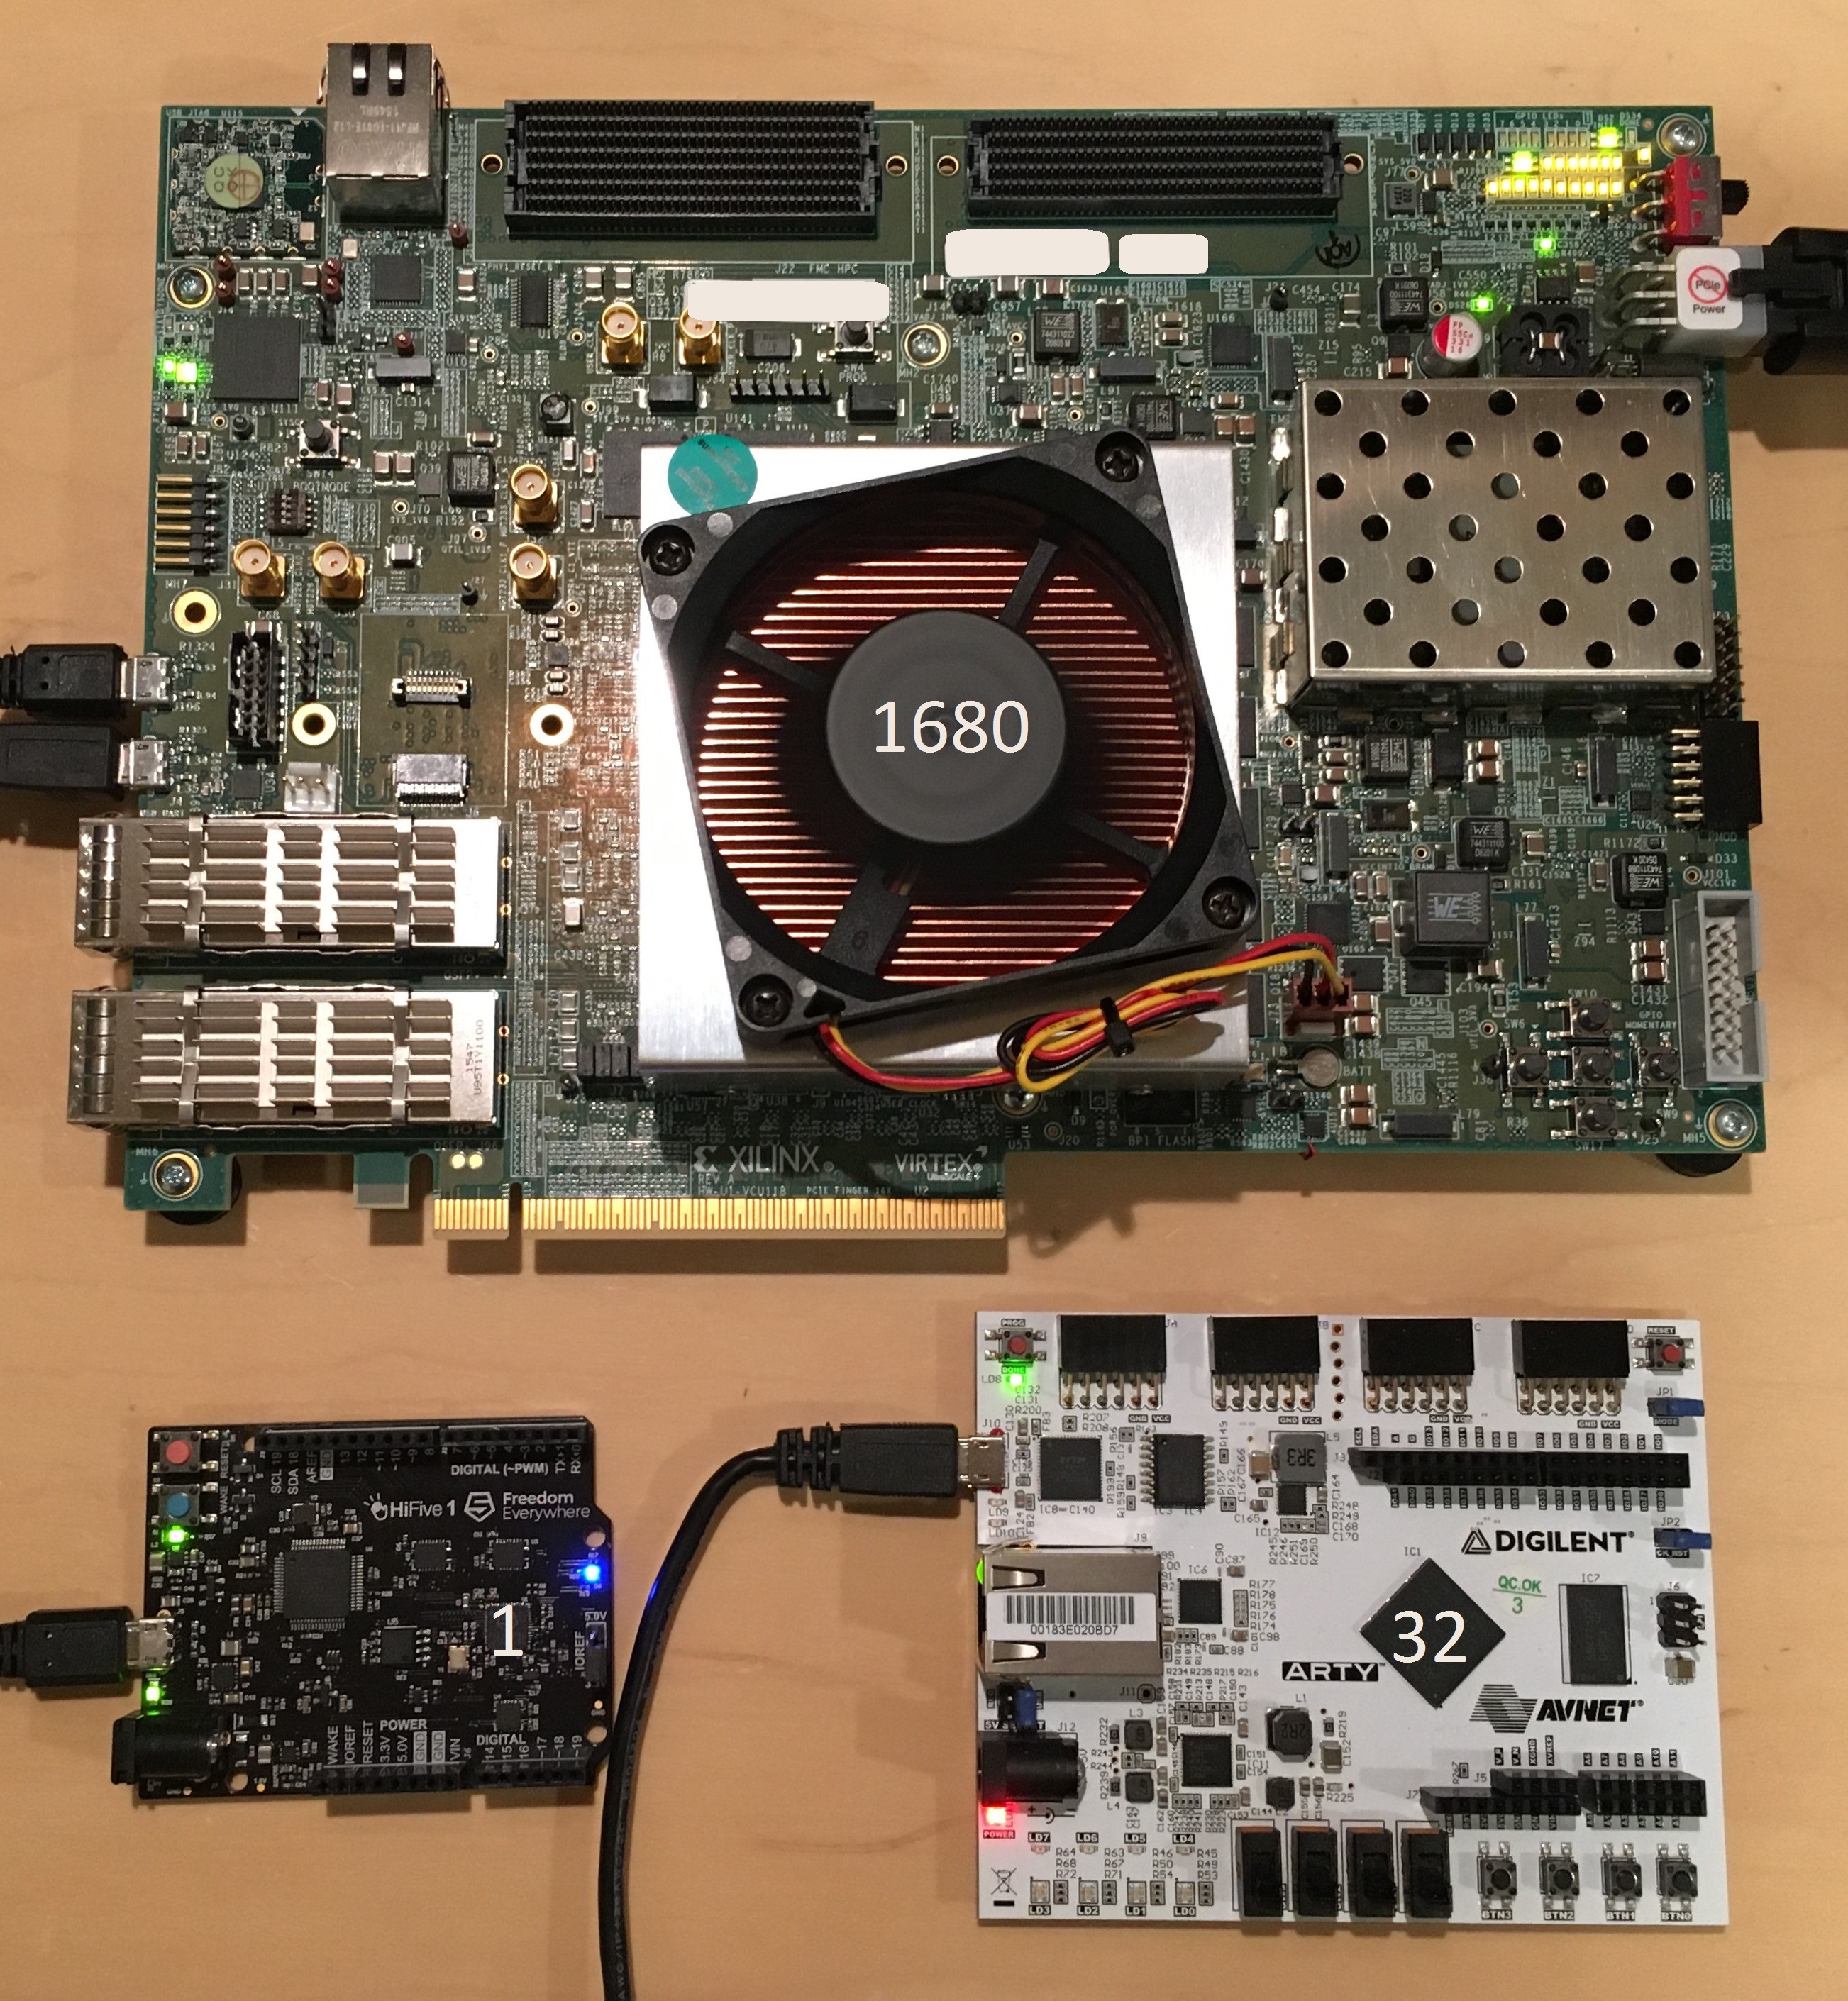 1-core, 32-core and 1680-core RISC-V development boards.
See http://fpga.org/2017/01/12/grvi-phalanx-joins-the-kilocore-club/ 